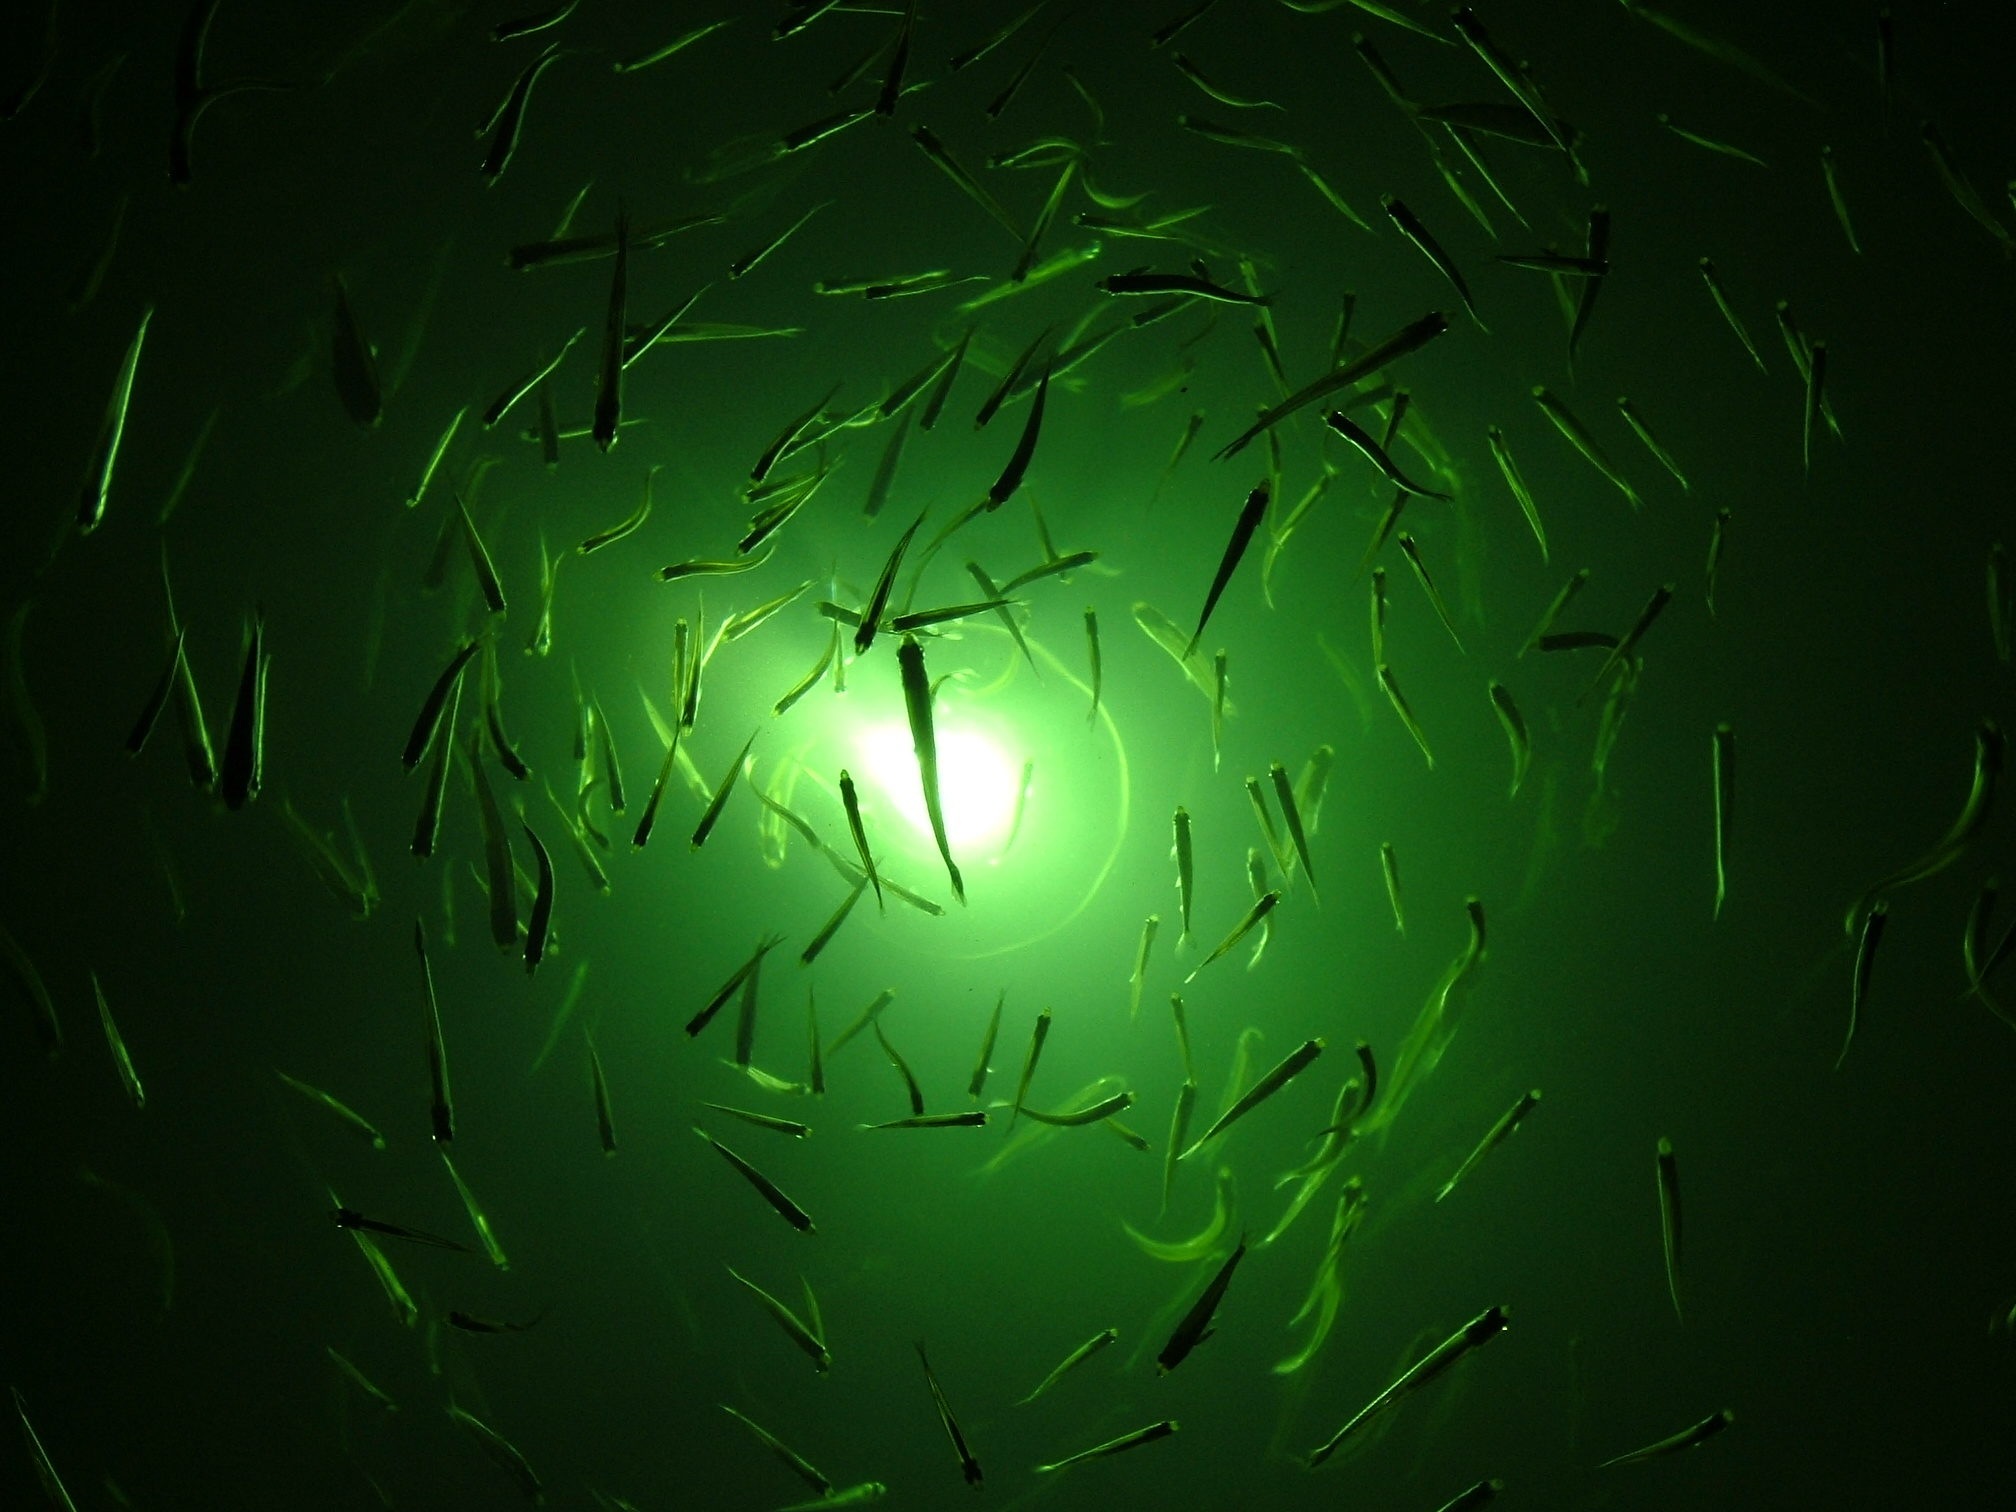 Fishing Light Attractor, Fishing Lure Light